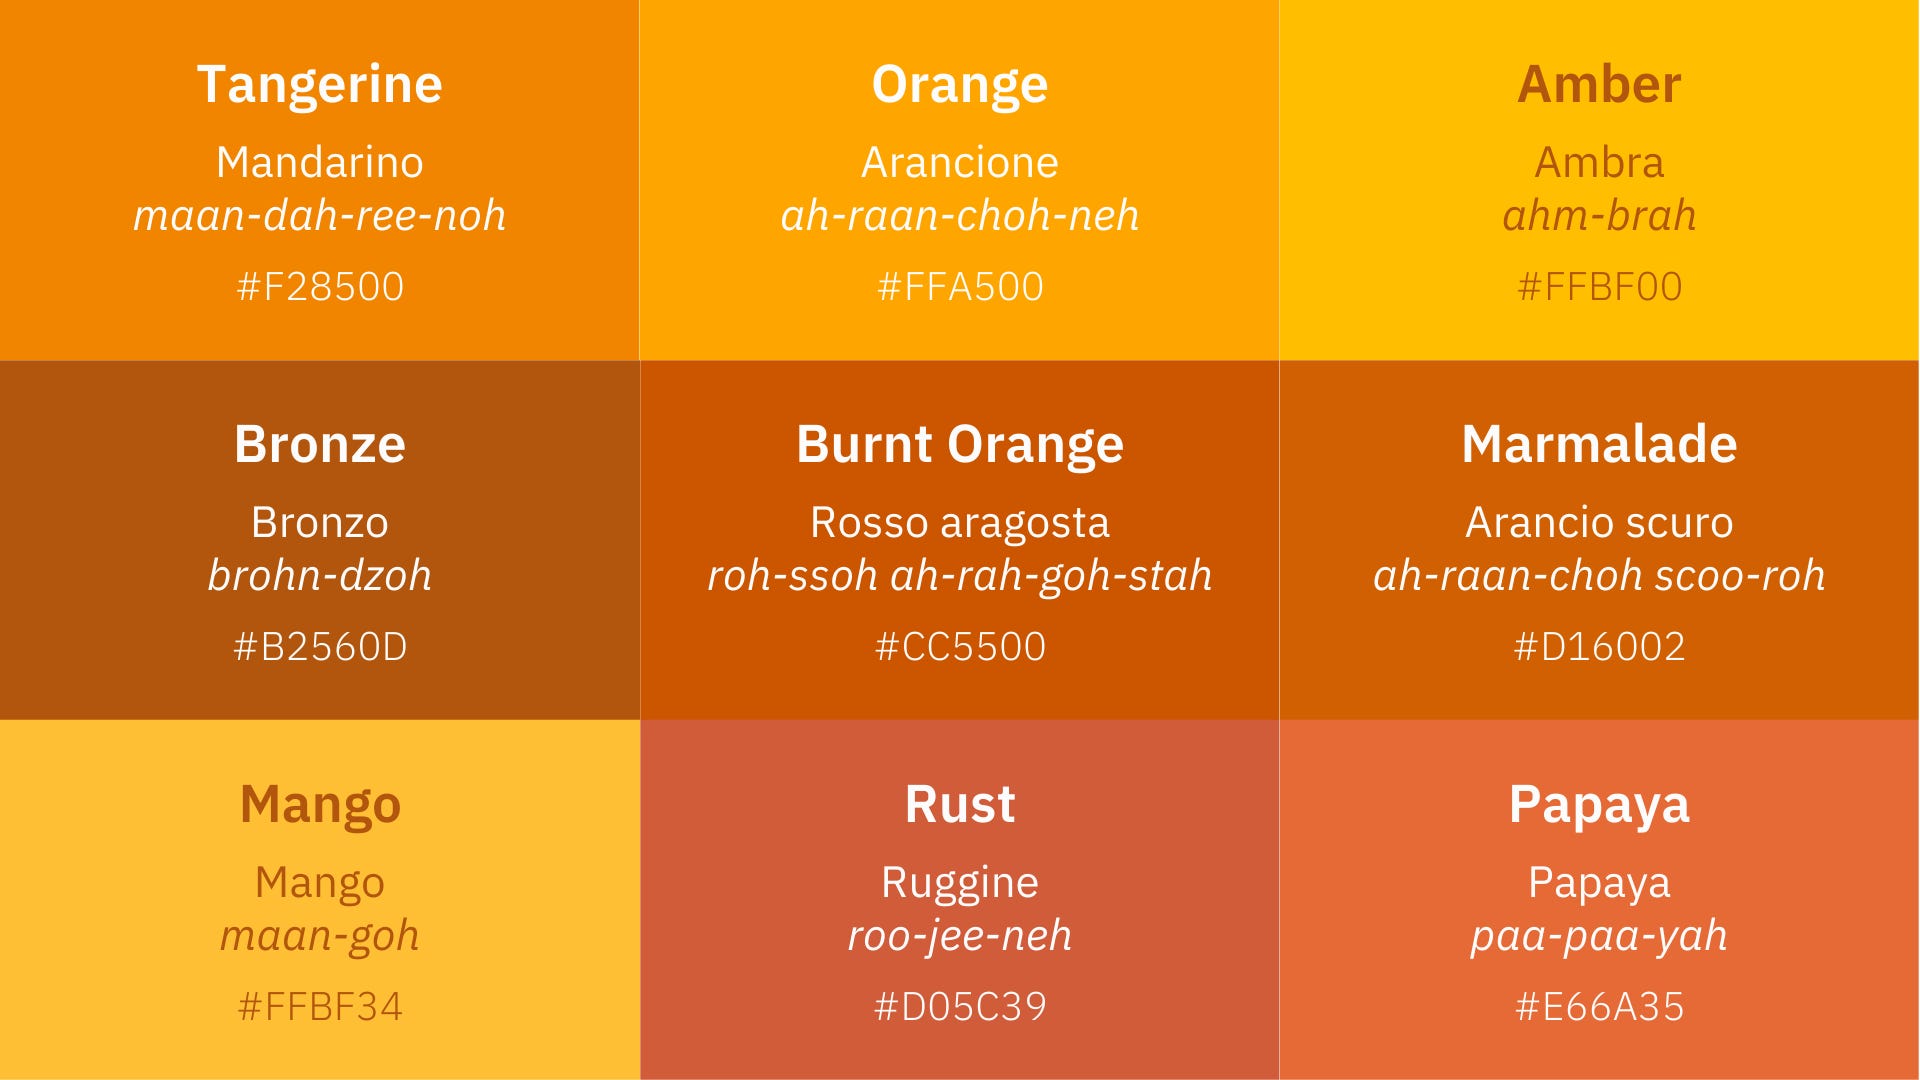 Orange in Italian.